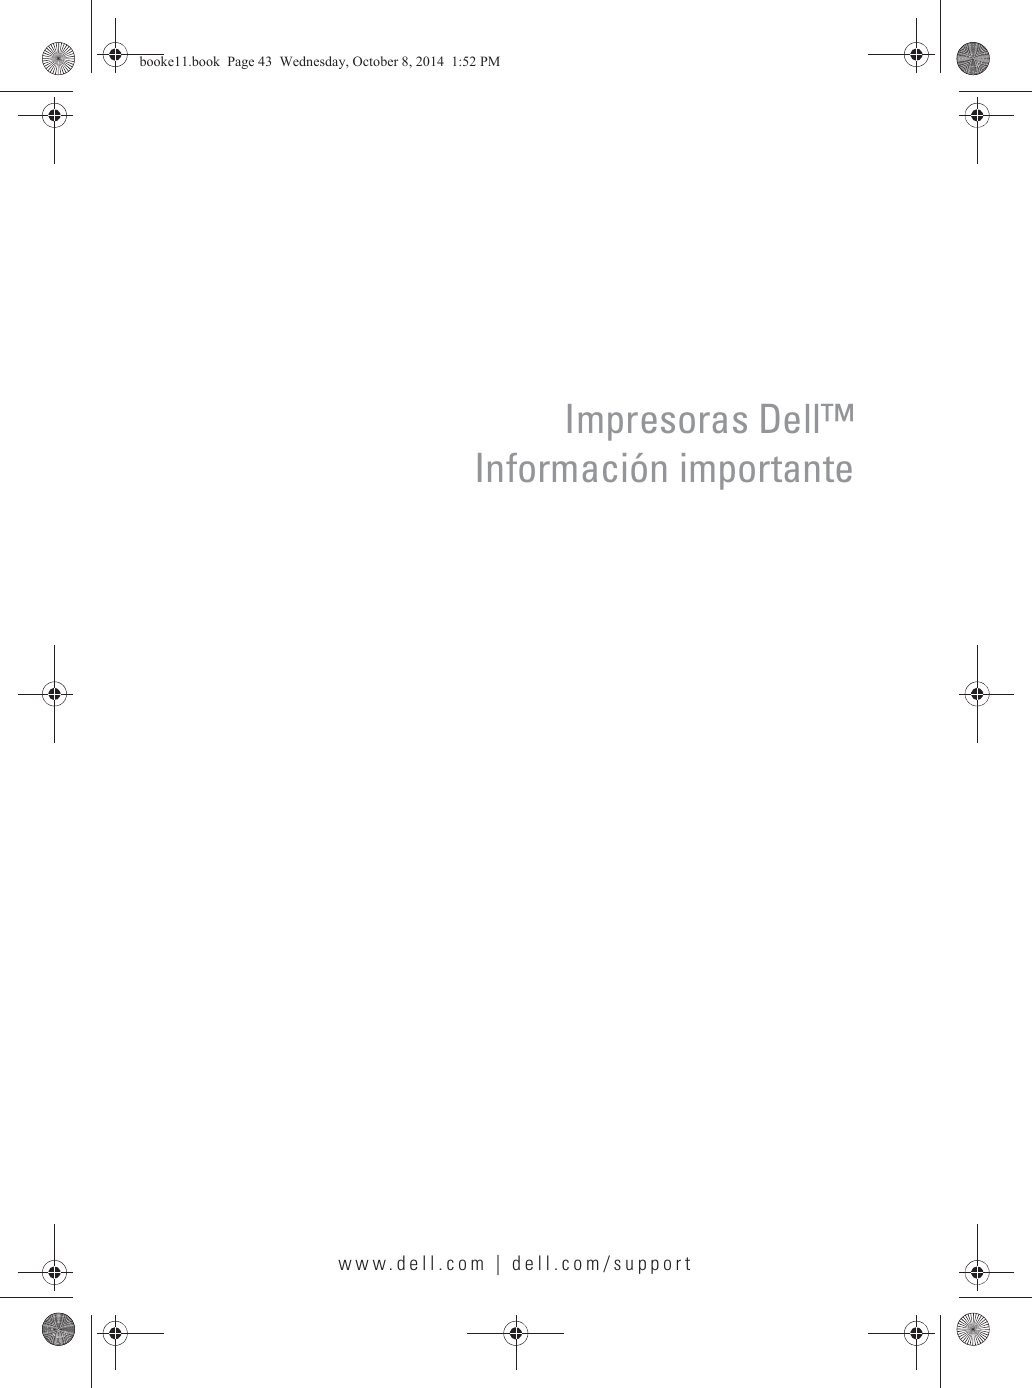 www.dell.com | dell.com/supportImpresoras Dell™Información importantebooke11.book  Page 43  Wednesday, October 8, 2014  1:52 PM